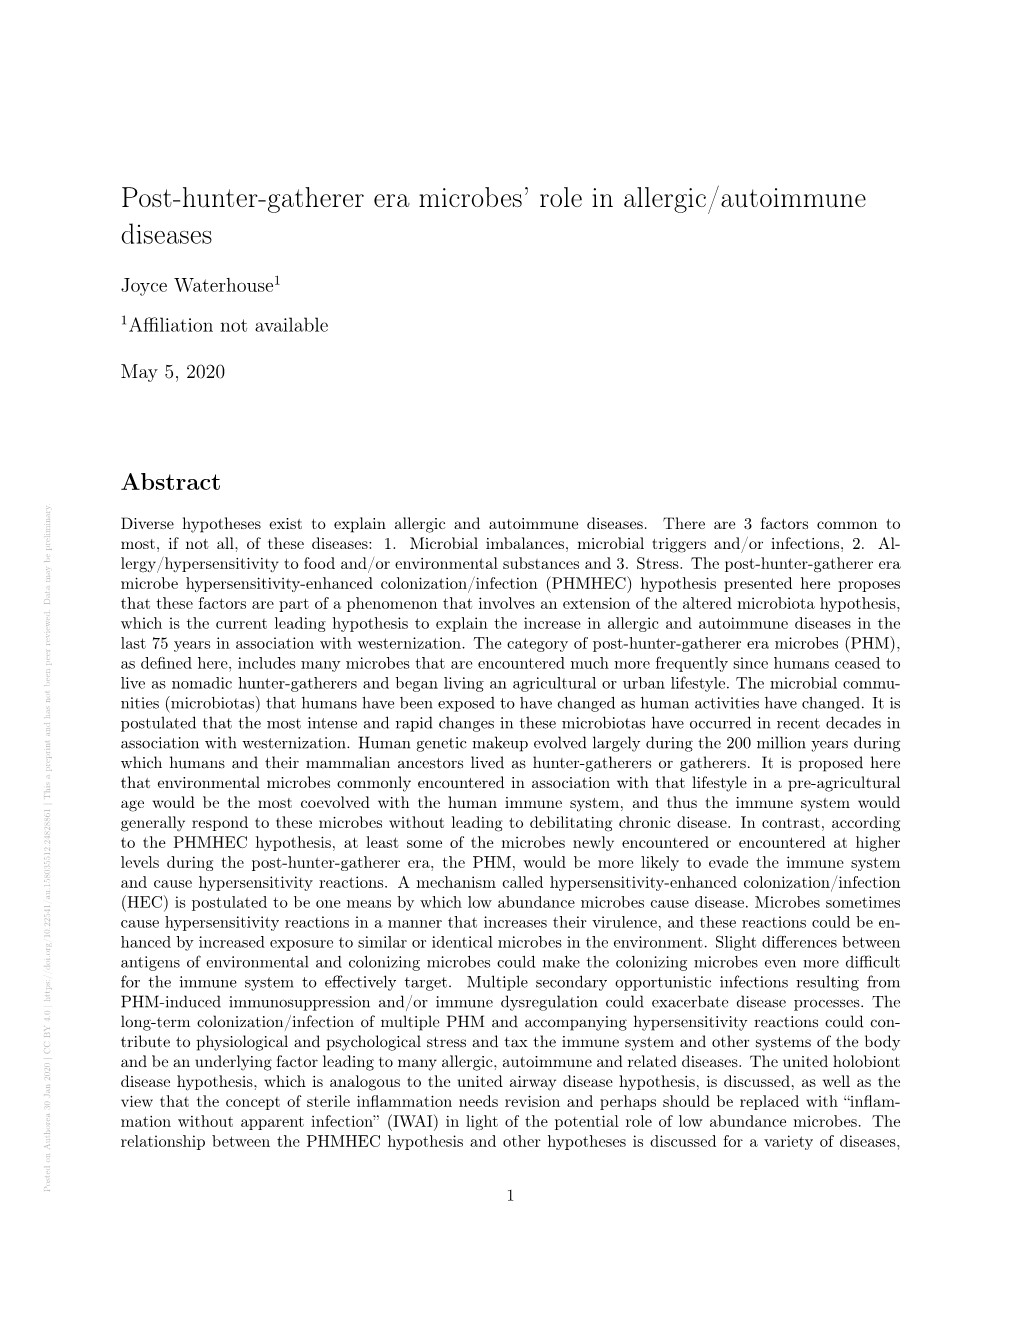 Post-Hunter-Gatherer Era Microbes' Role in Allergic/Autoimmune Diseases